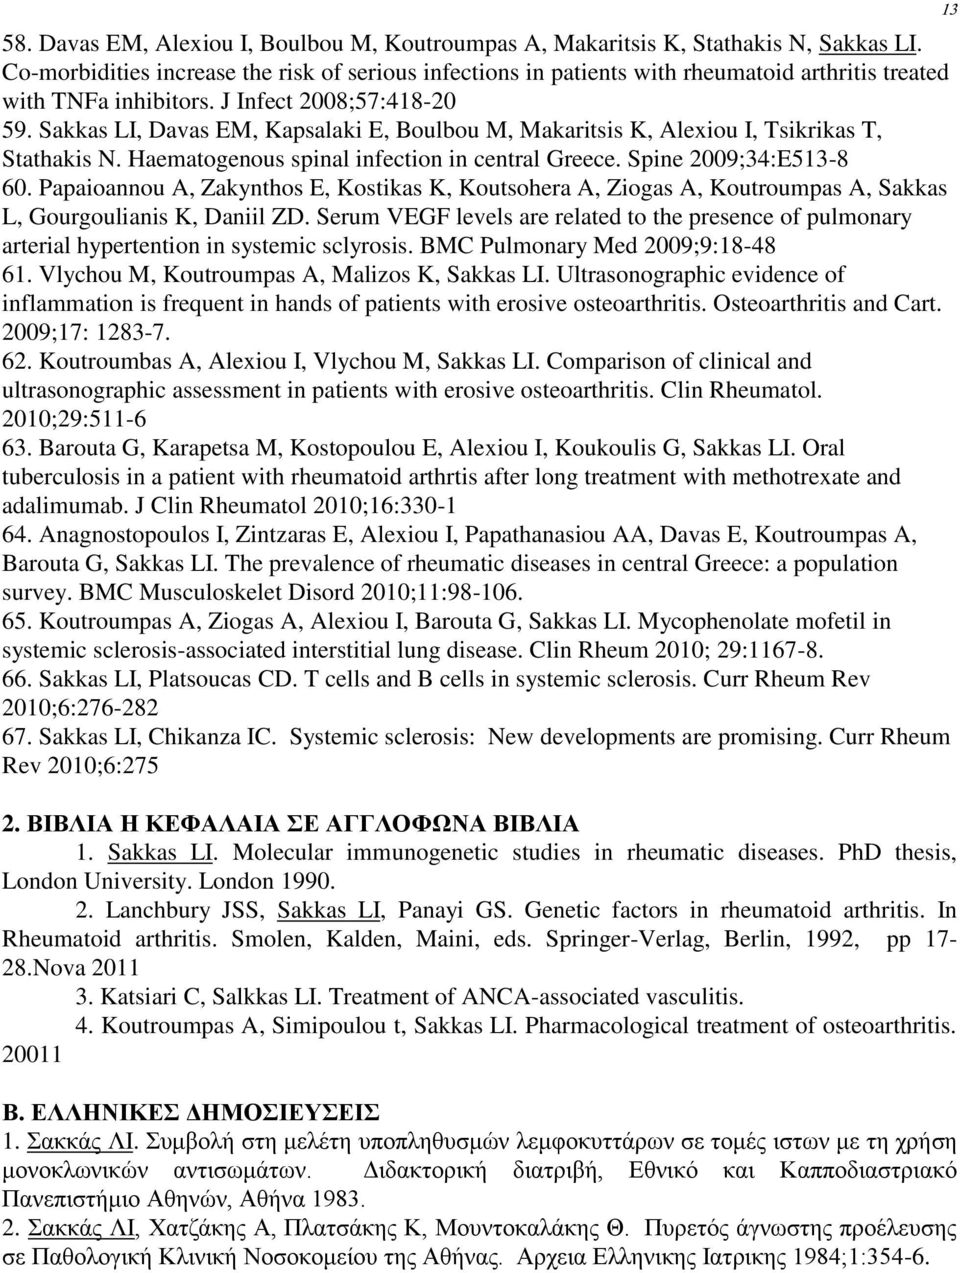 Sakkas LI, Davas EM, Kapsalaki E, Boulbou M, Makaritsis K, Alexiou I, Tsikrikas T, Stathakis N. Haematogenous spinal infection in central Greece. Spine 2009;34:E513-8 60.